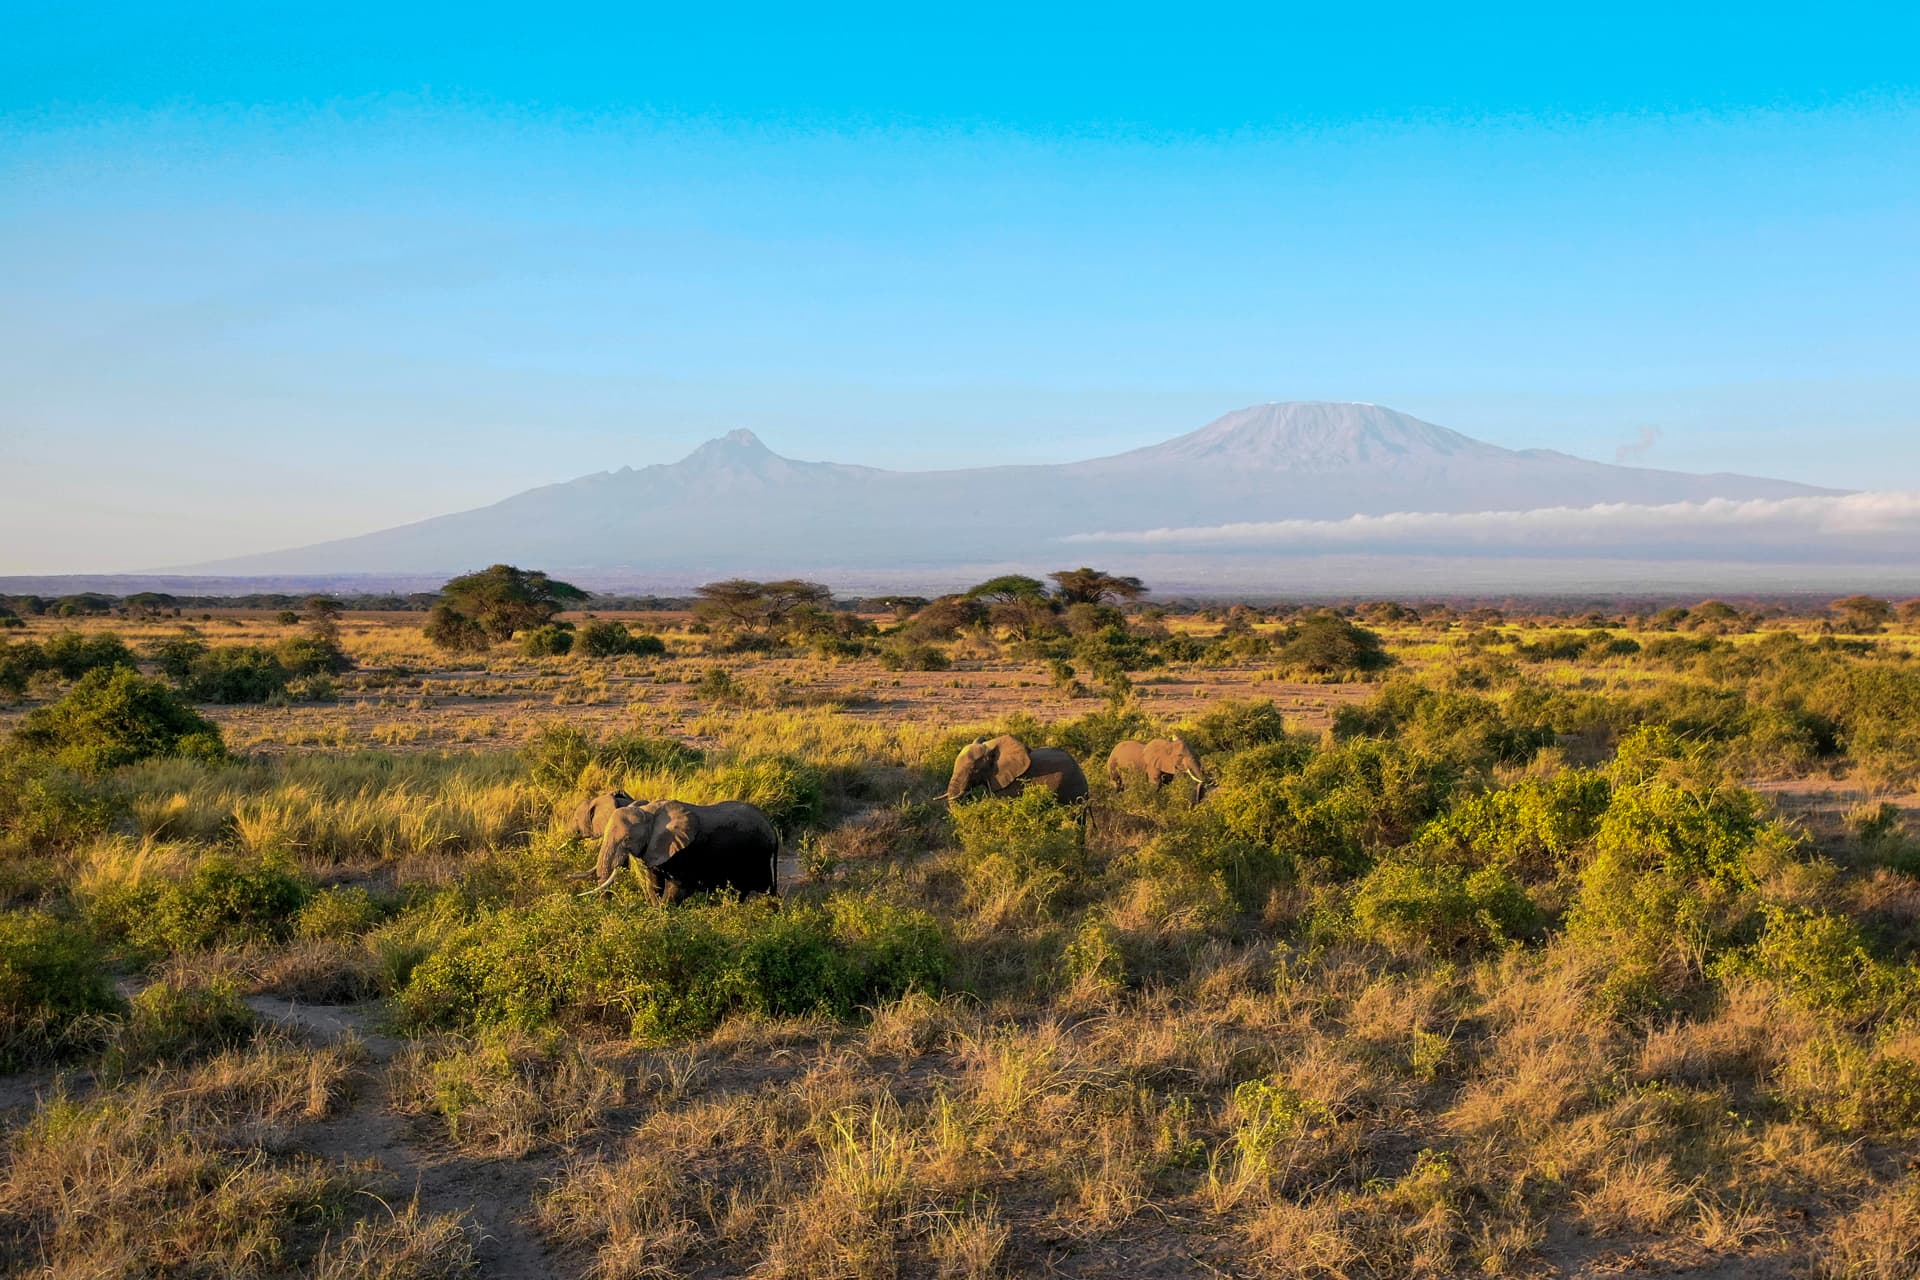 Above: A warm Amboseli welcome 